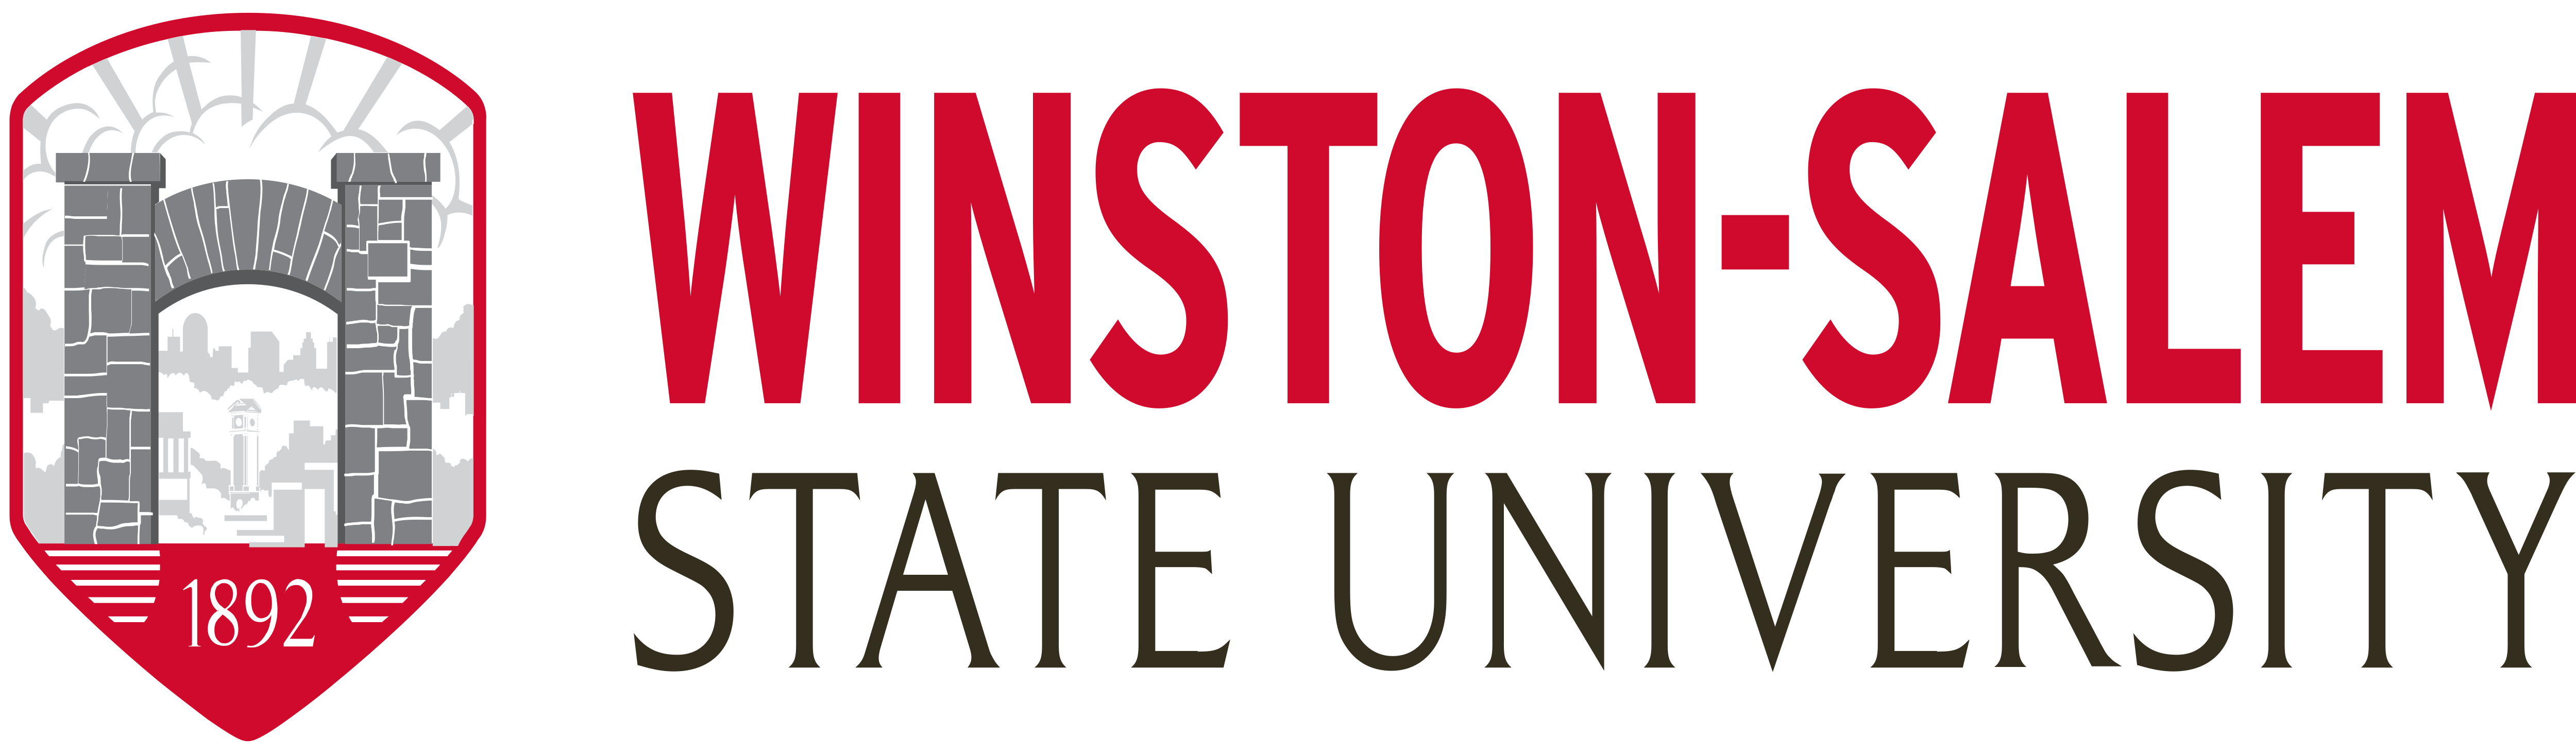 Winston-Salem State University : Brand Short Description Type Here.